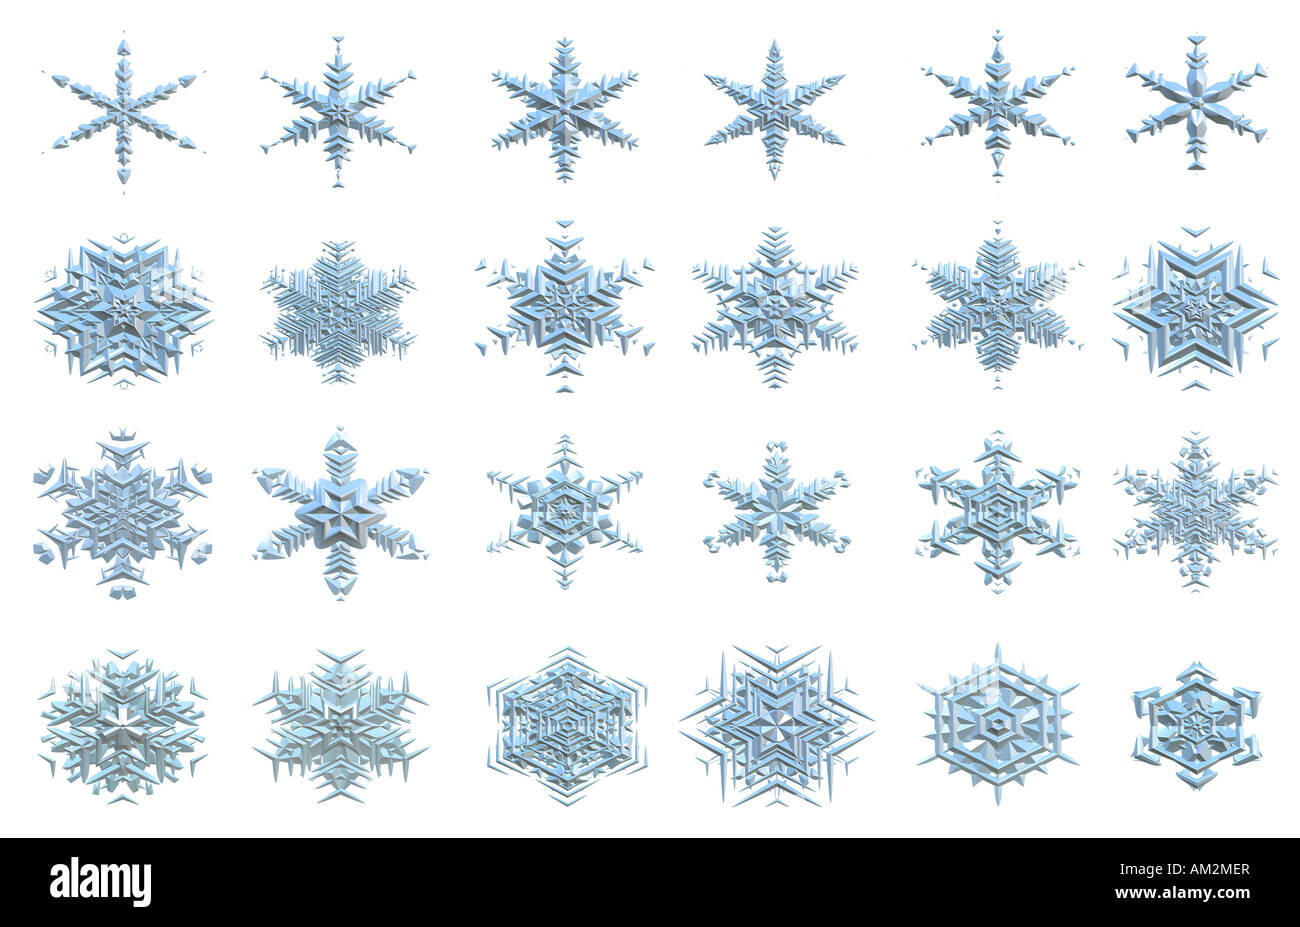 3D Standing Wood Snowflakes Set / Christmas Snowflake Balls